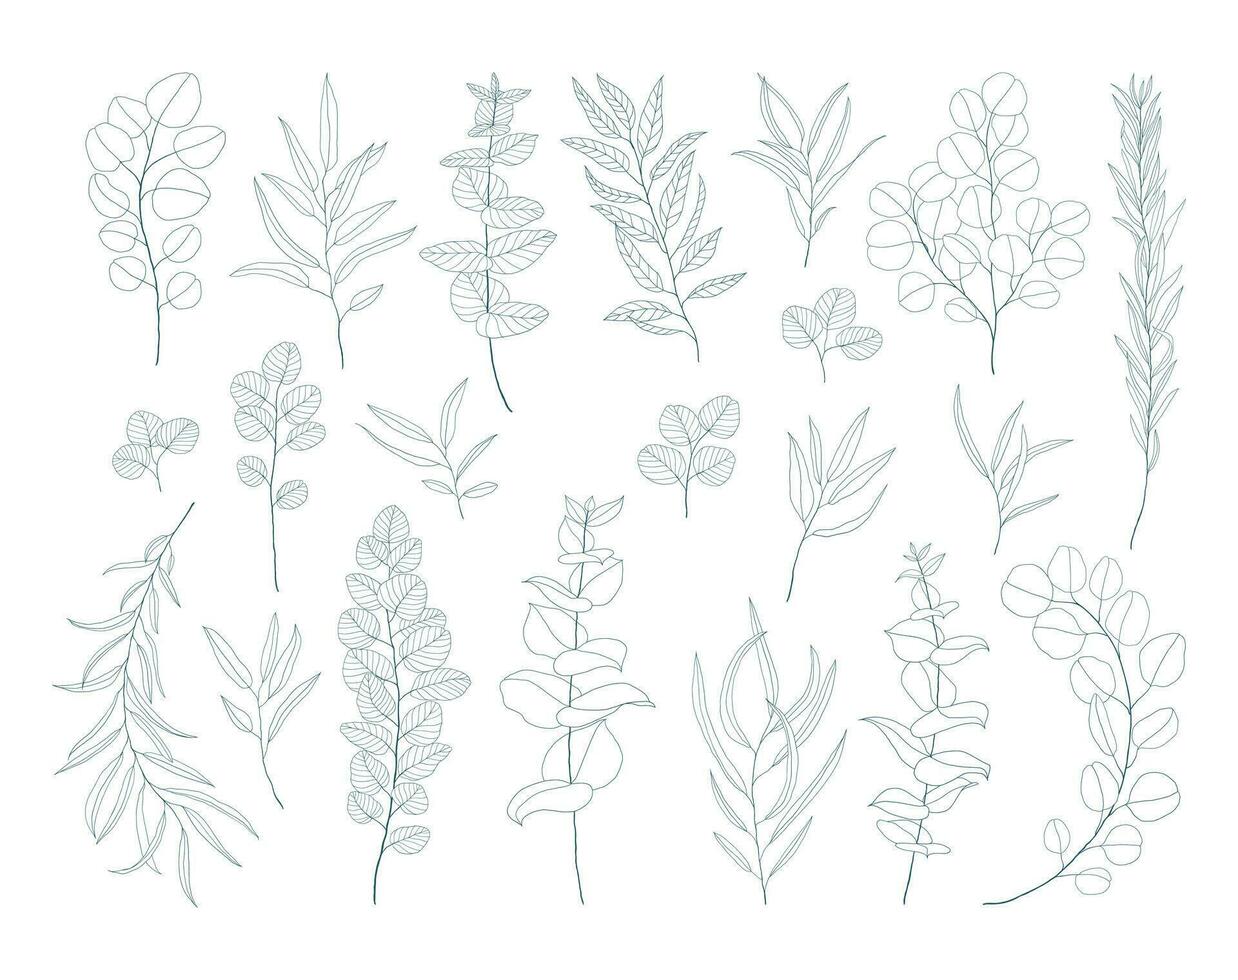 línea Arte eucalipto ramas y hojas colocar. exótico floral ilustración aislado en blanco antecedentes. mano dibujado floral clipart. botánico dibujos. vector